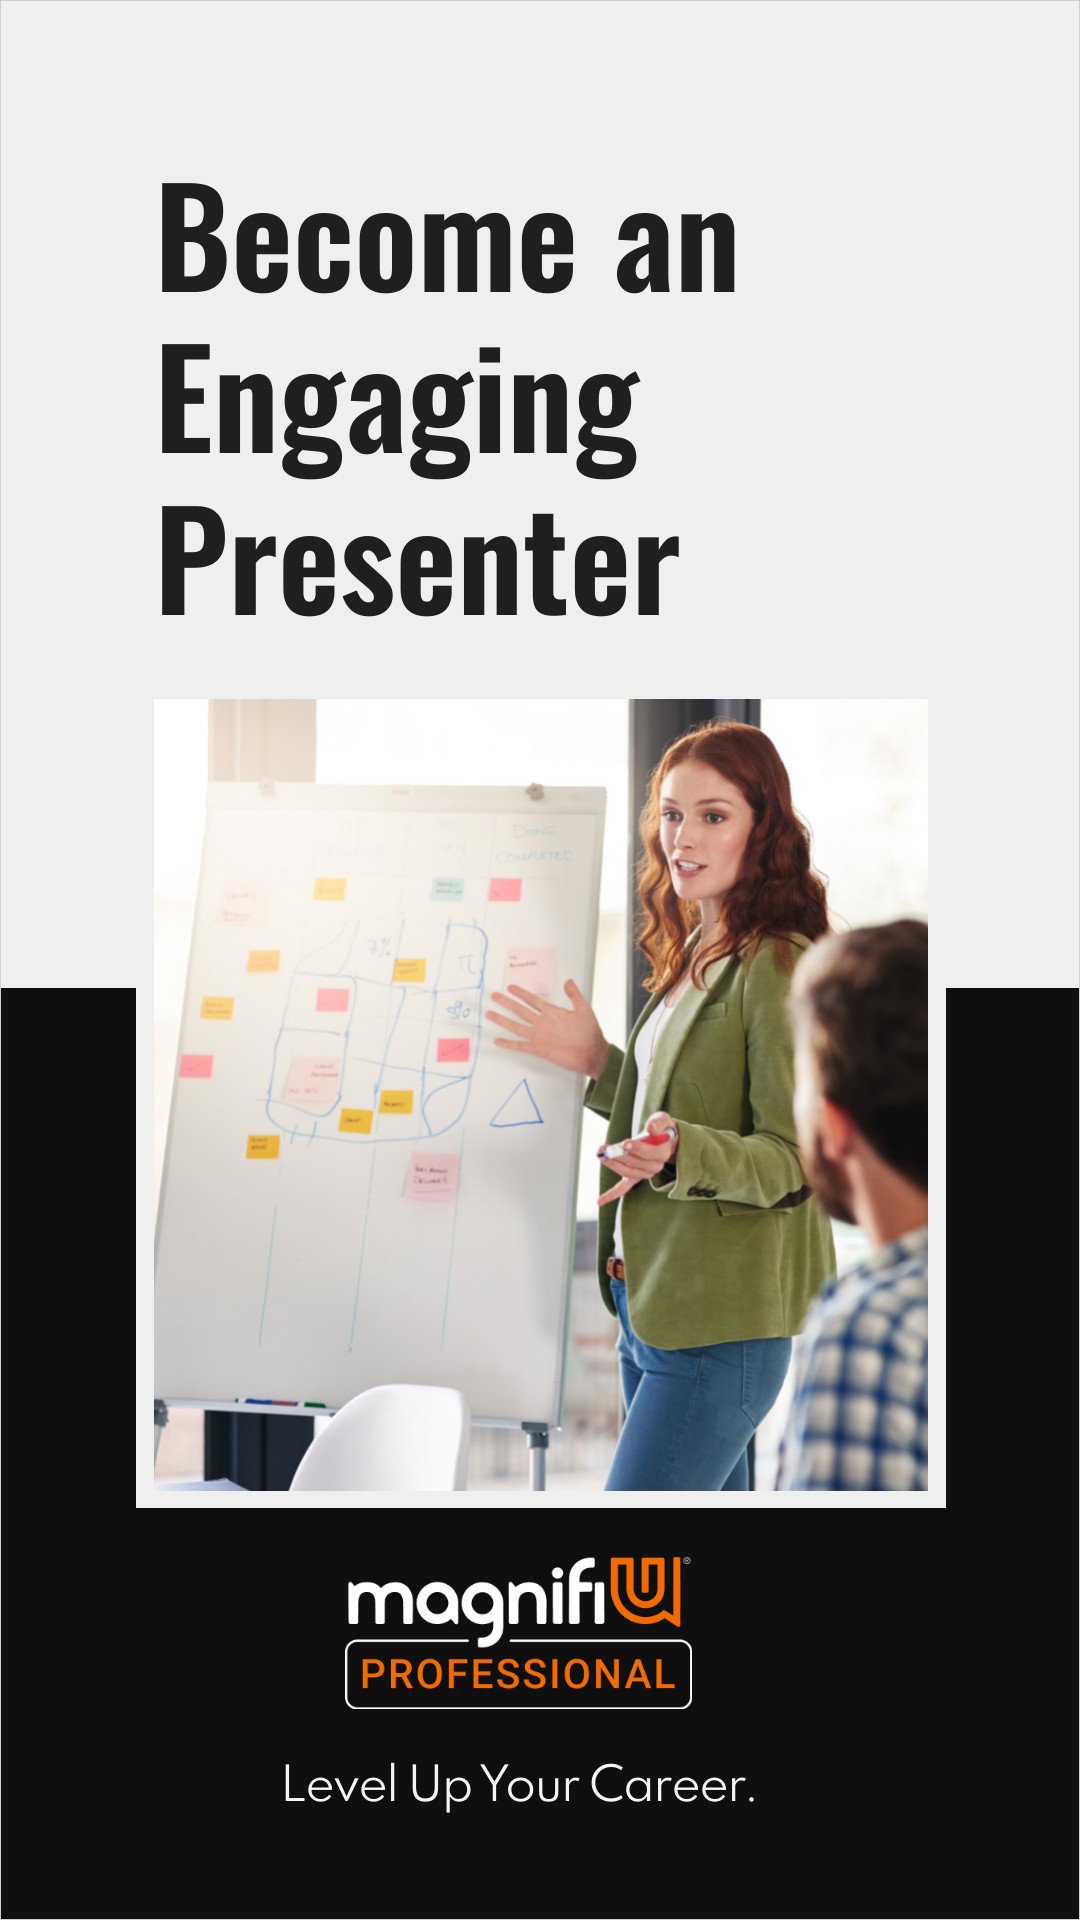 Become an Engaging Presenter-1080x1920-px.jpg